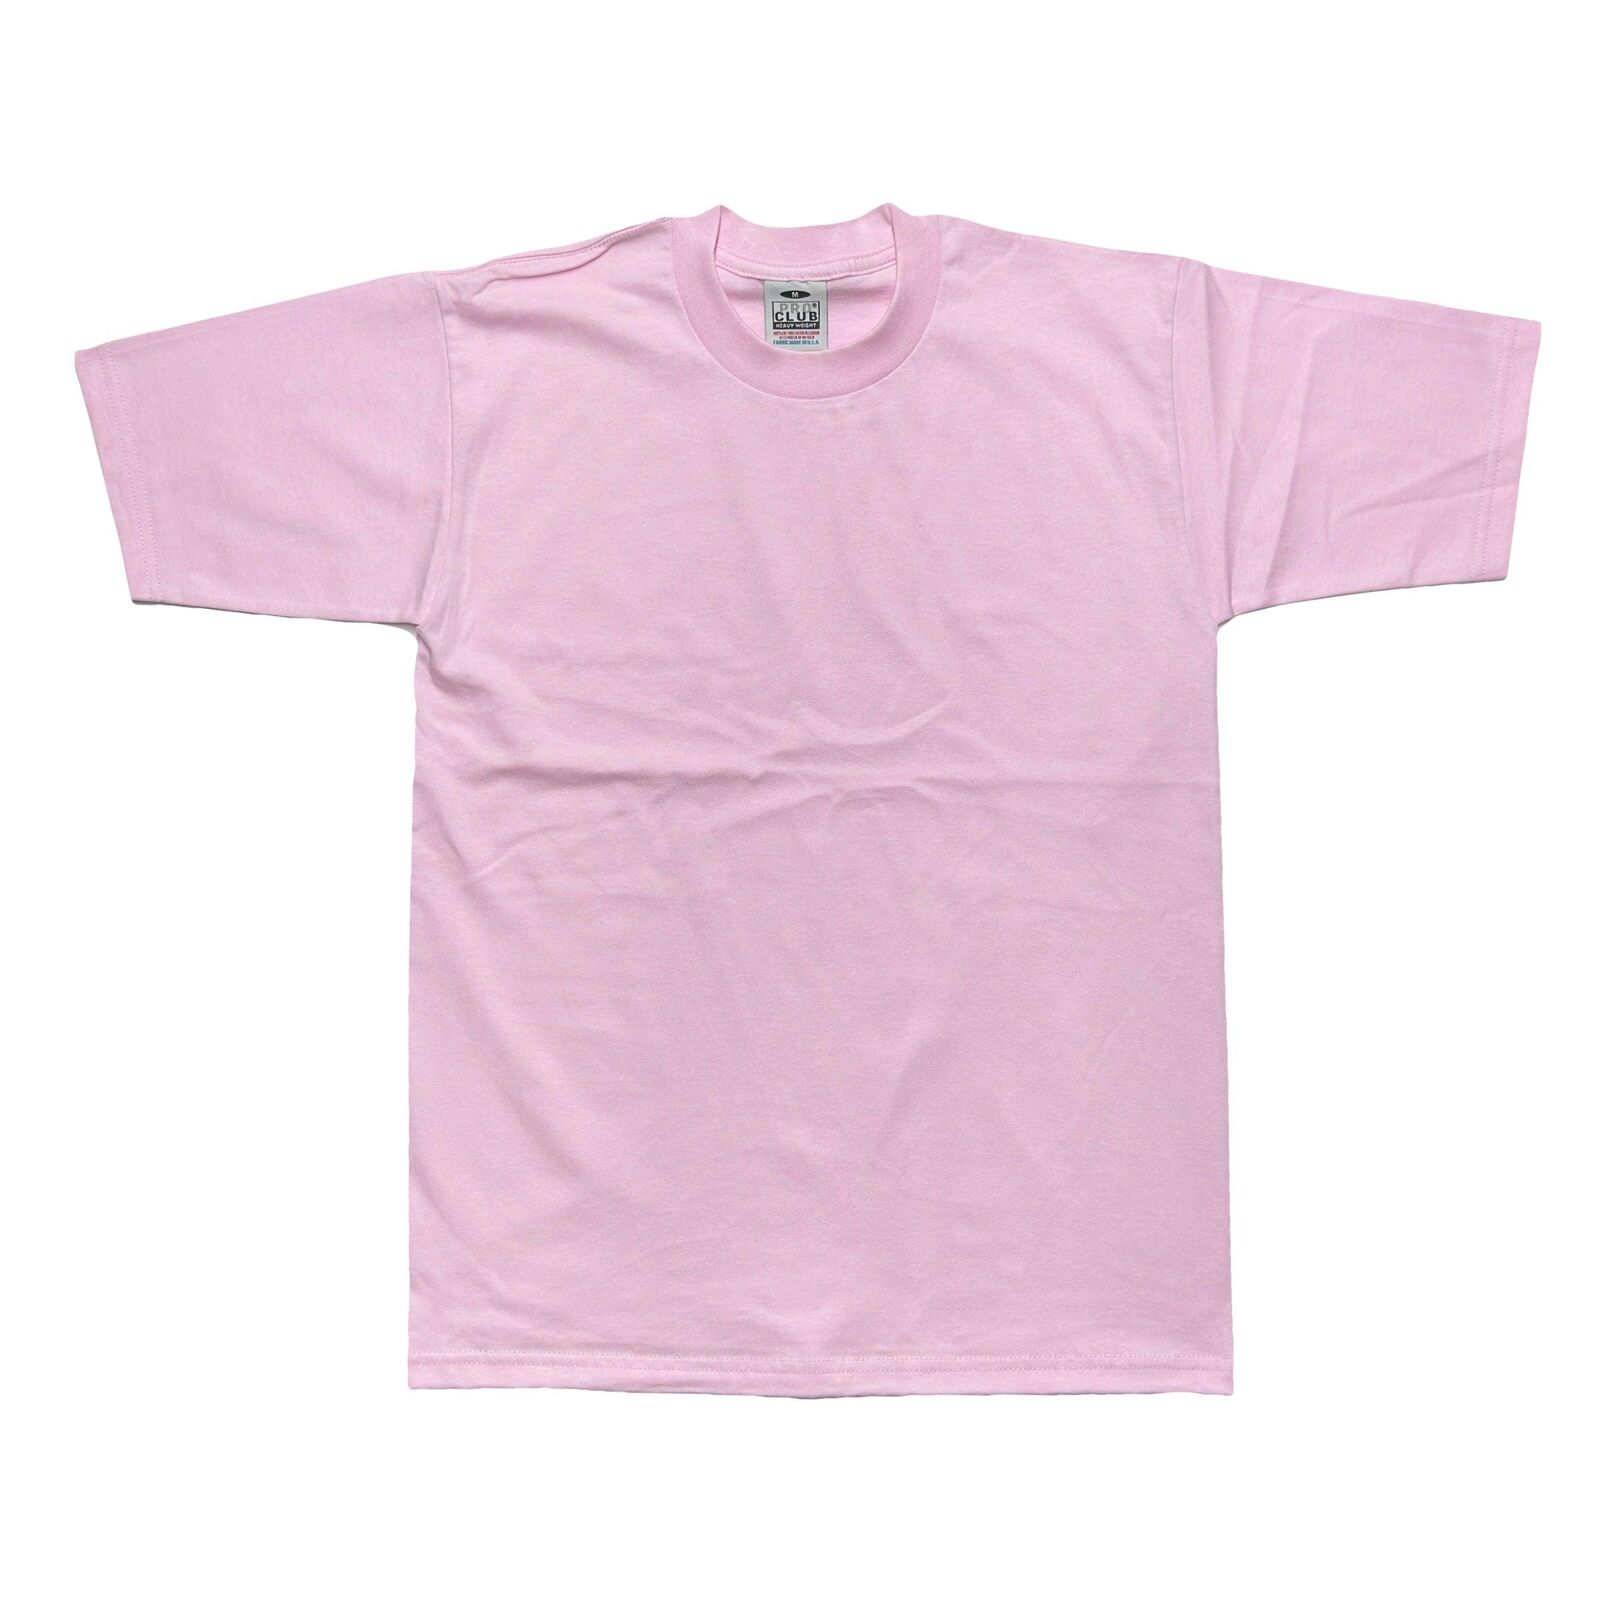 Pro Club Men's Heavyweight Cotton Short Sleeve Crew Neck T-Shirt (Pink/Sky Blue/